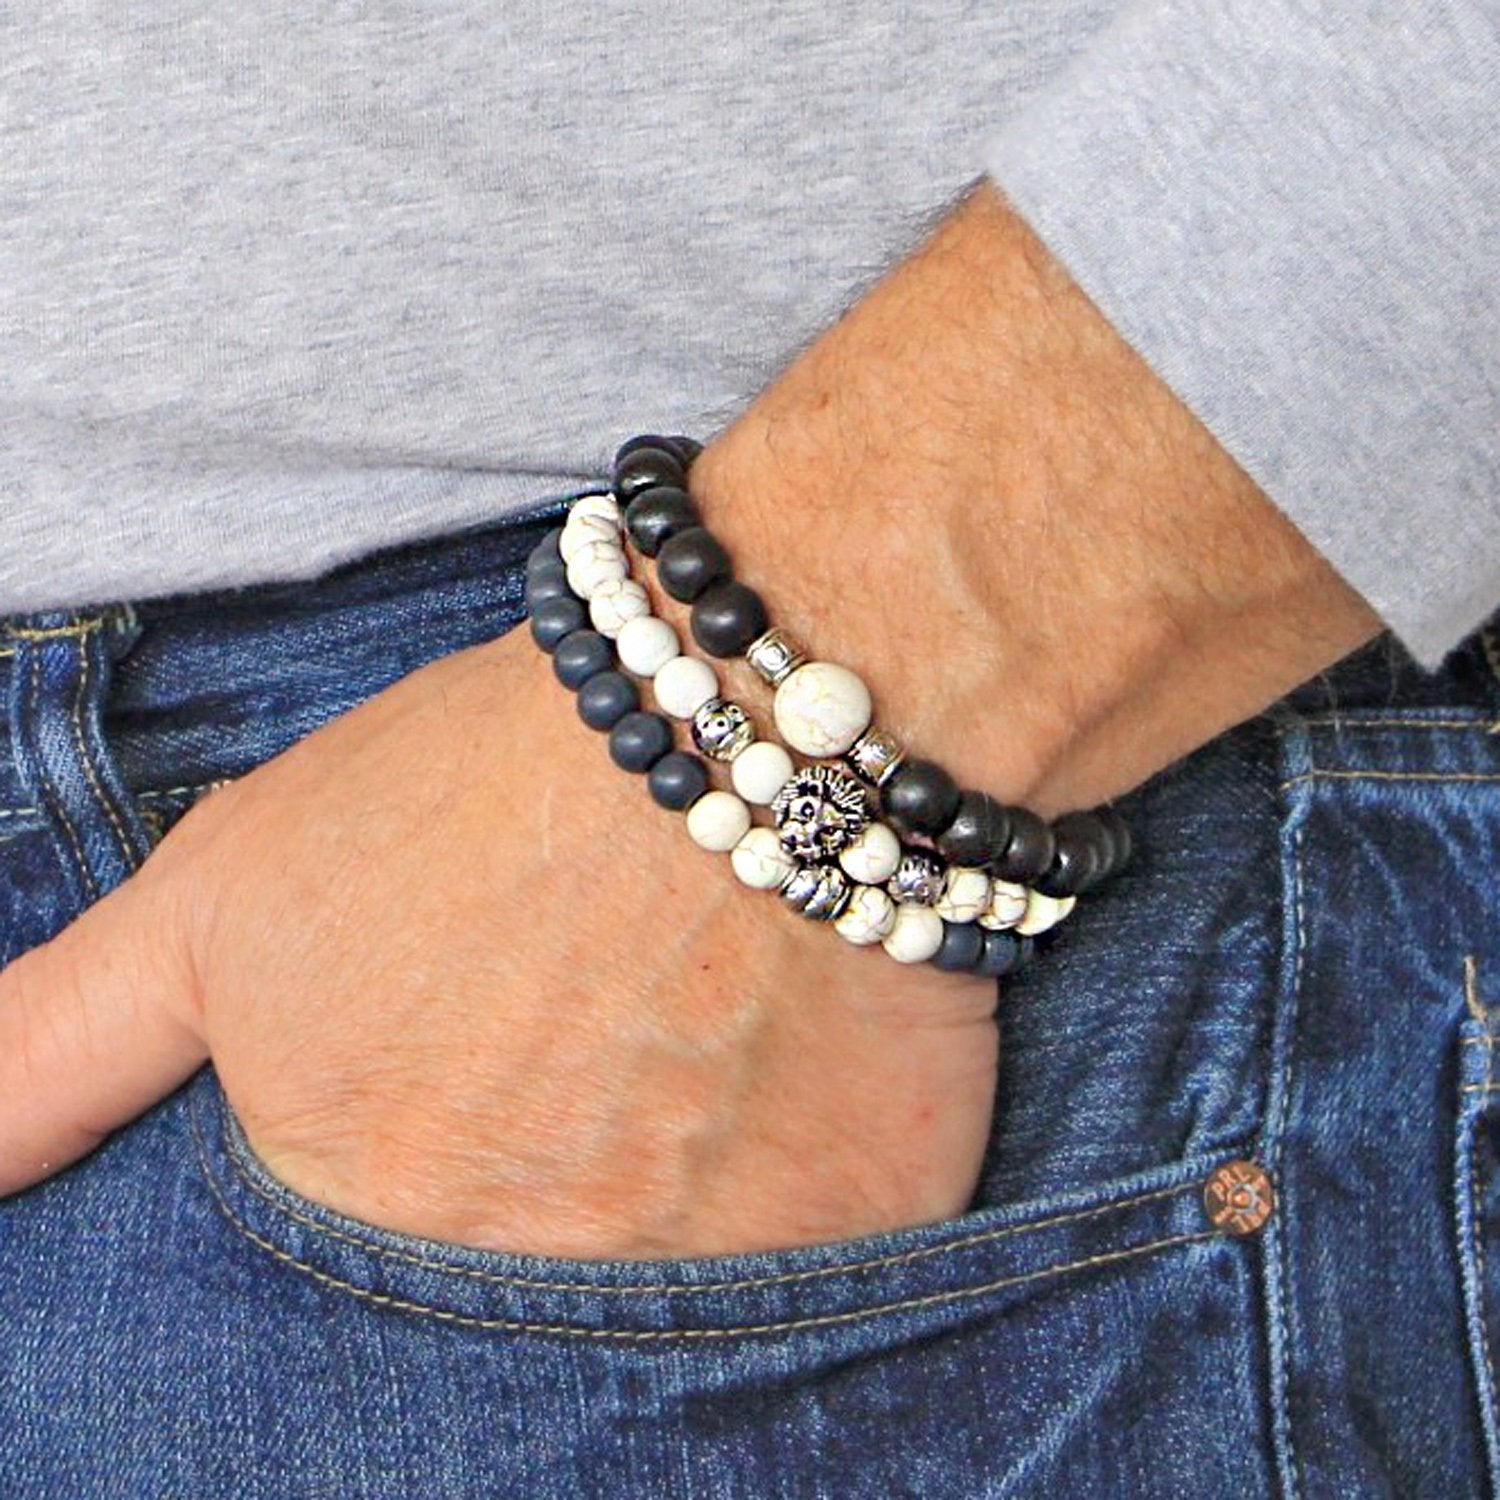 Men's Bracelets Set of 3 Beaded Stretch Bracelets Stack in Cream and Black - M16